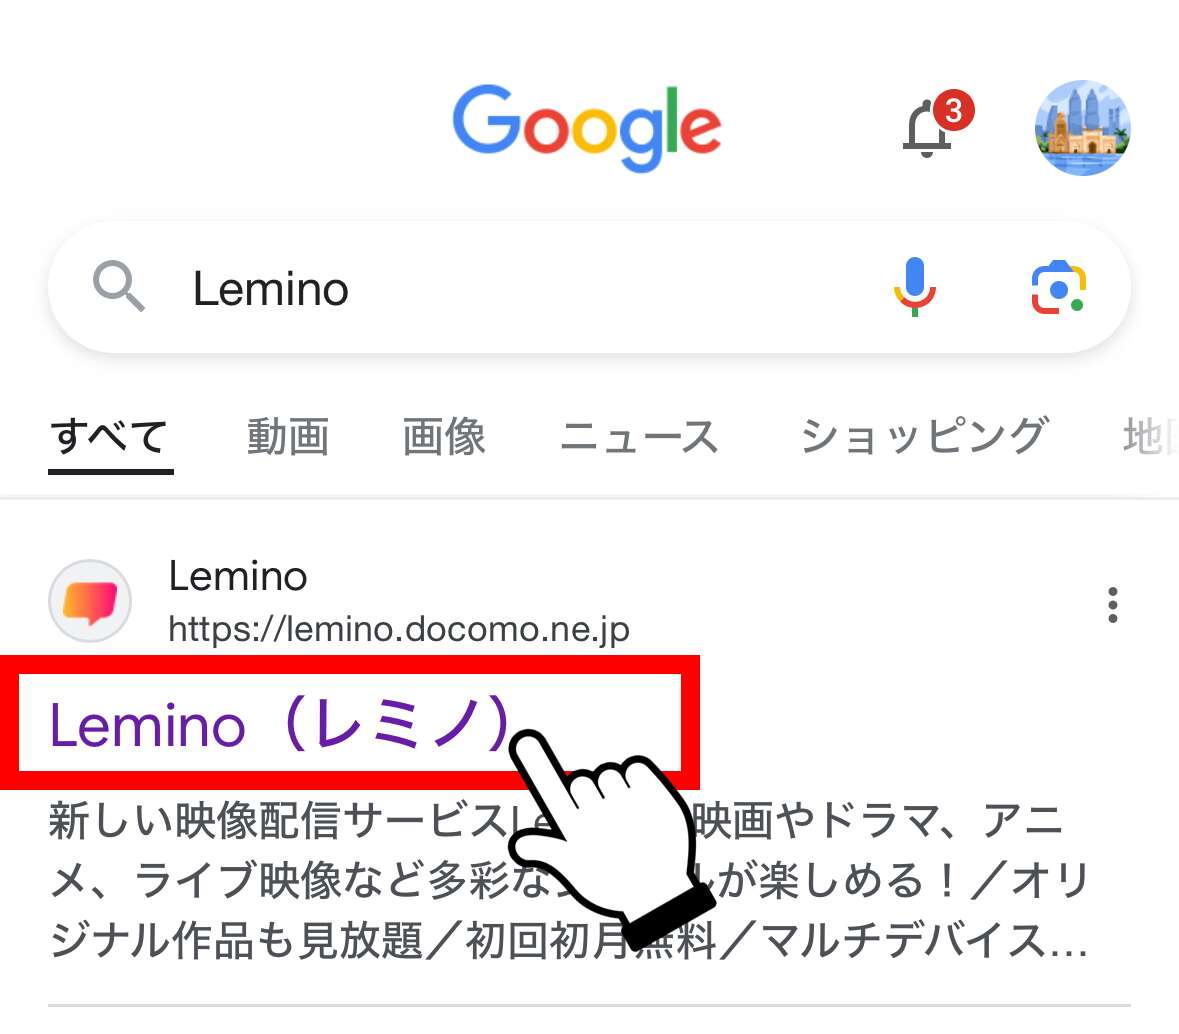 Lemino無料で利用する流れ①